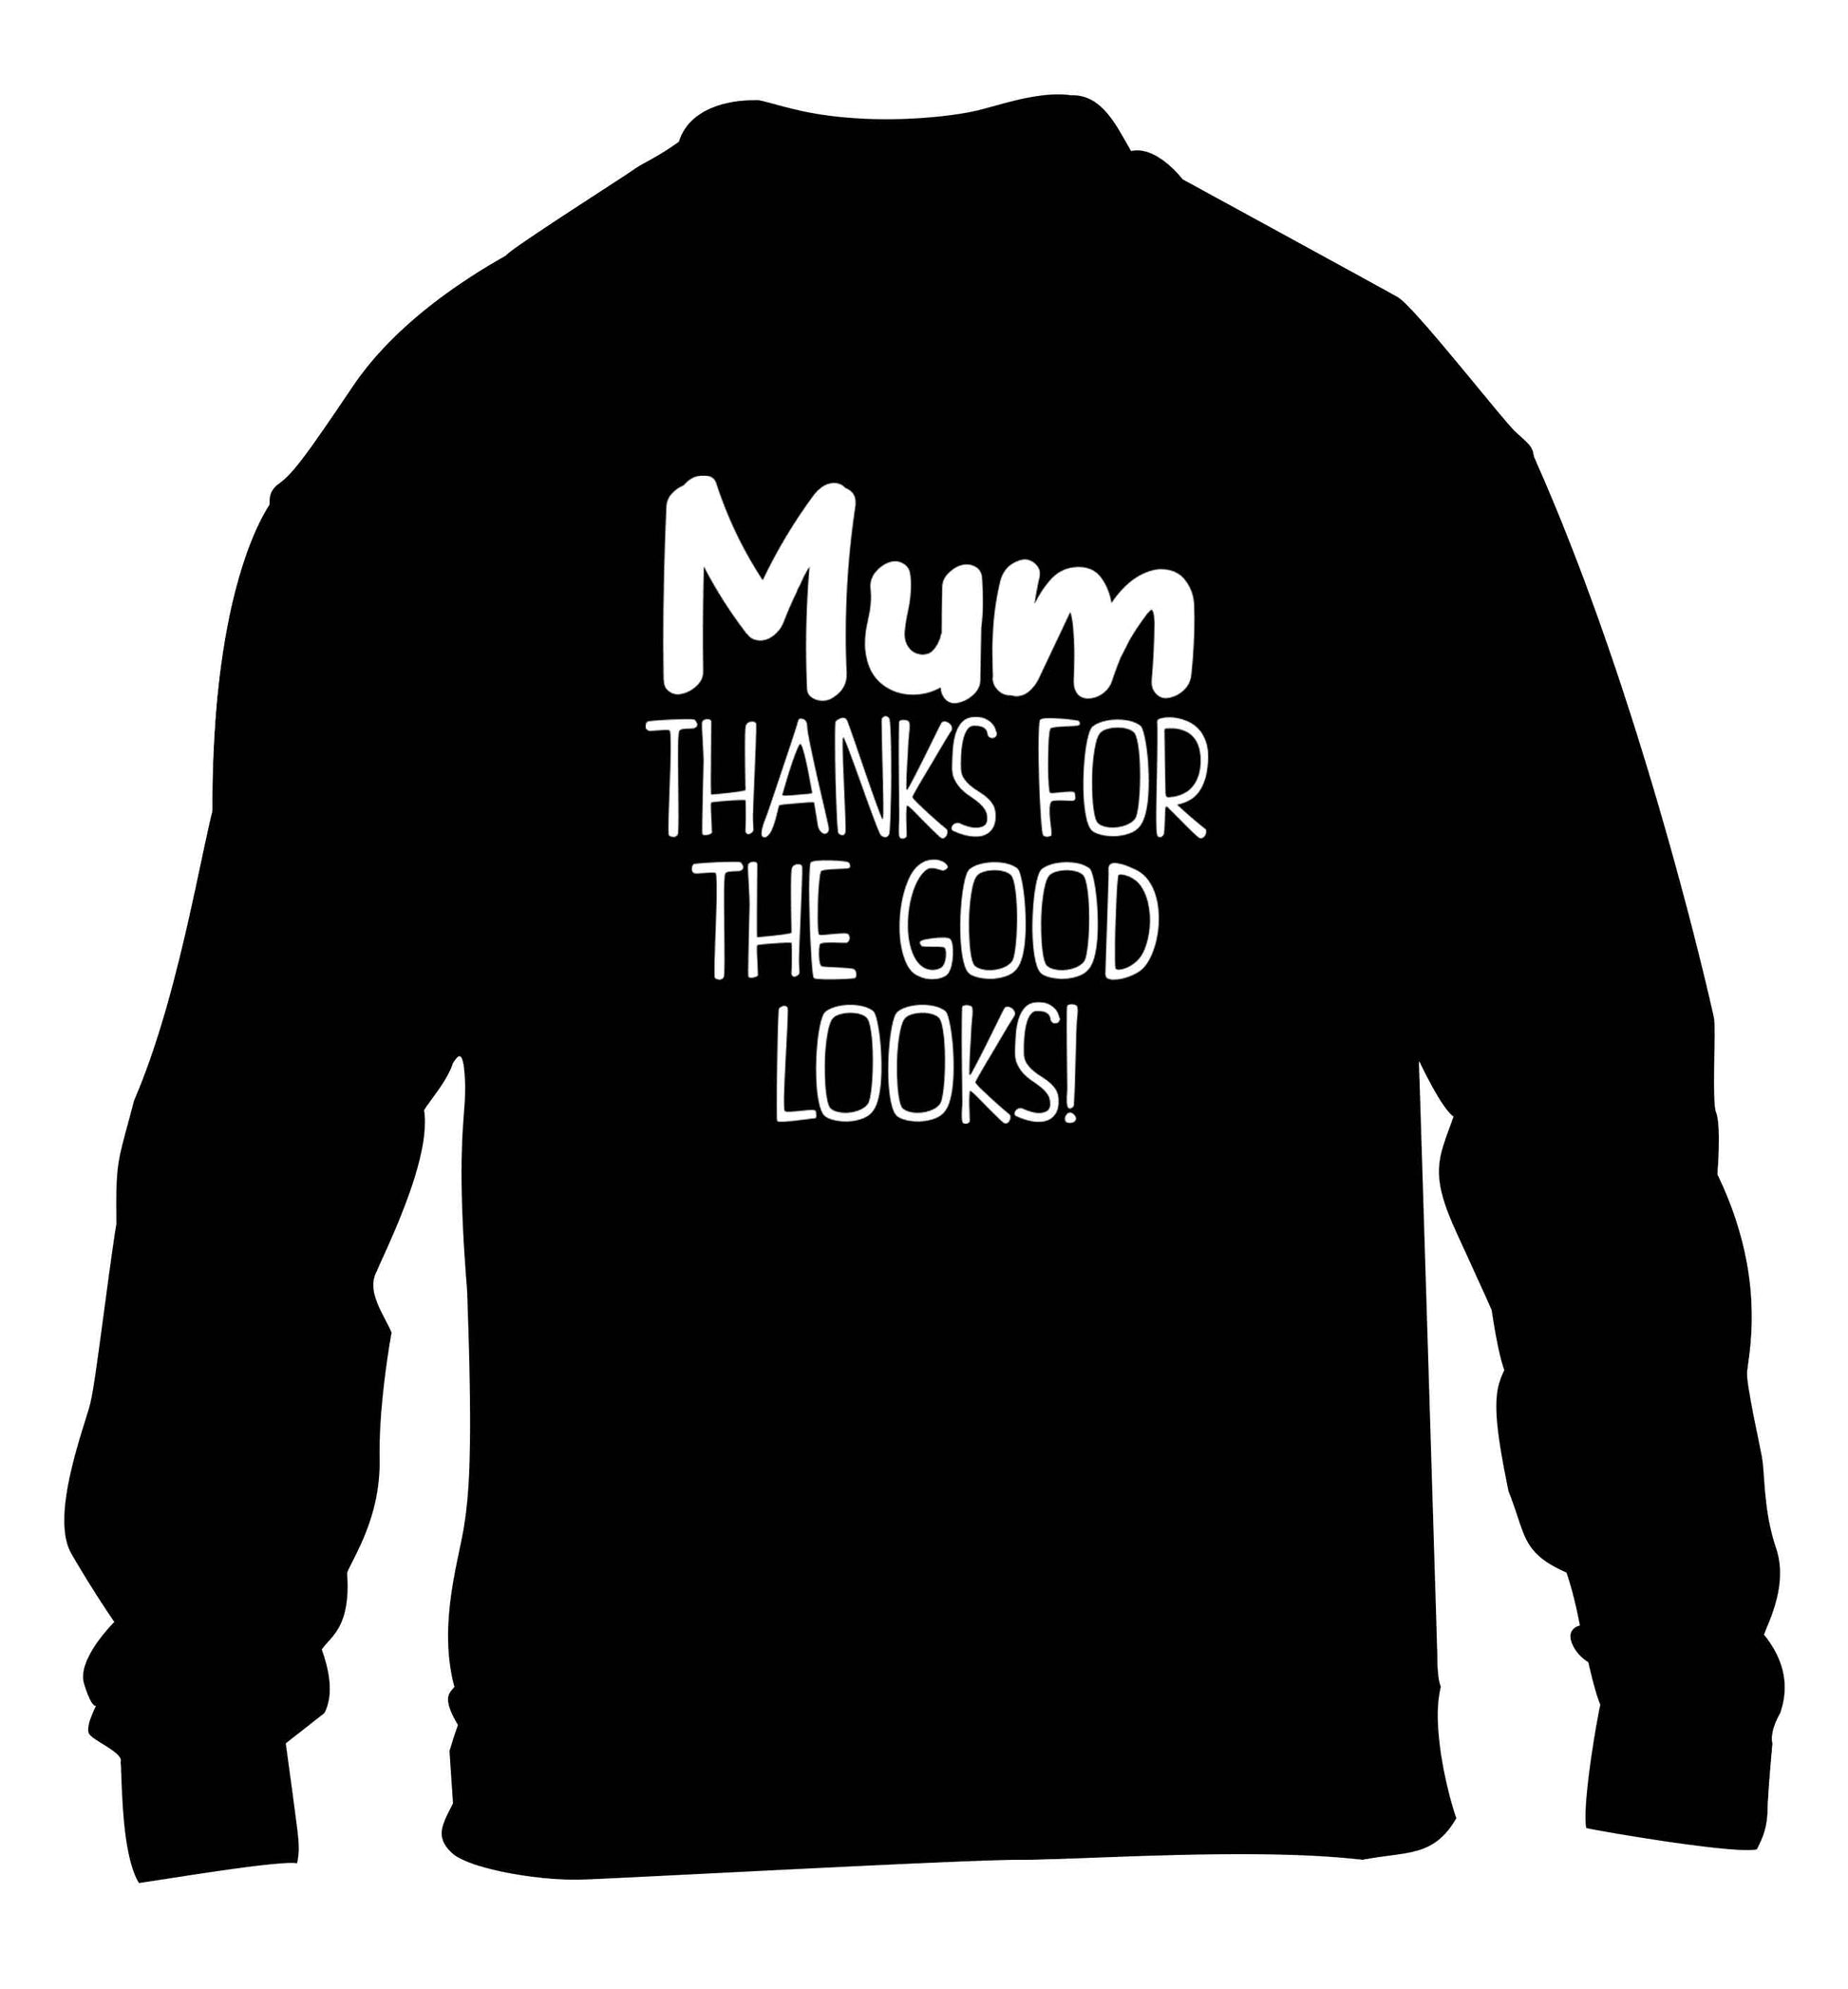 Mum thanks for the good looks! children's black sweater 12-13 Years